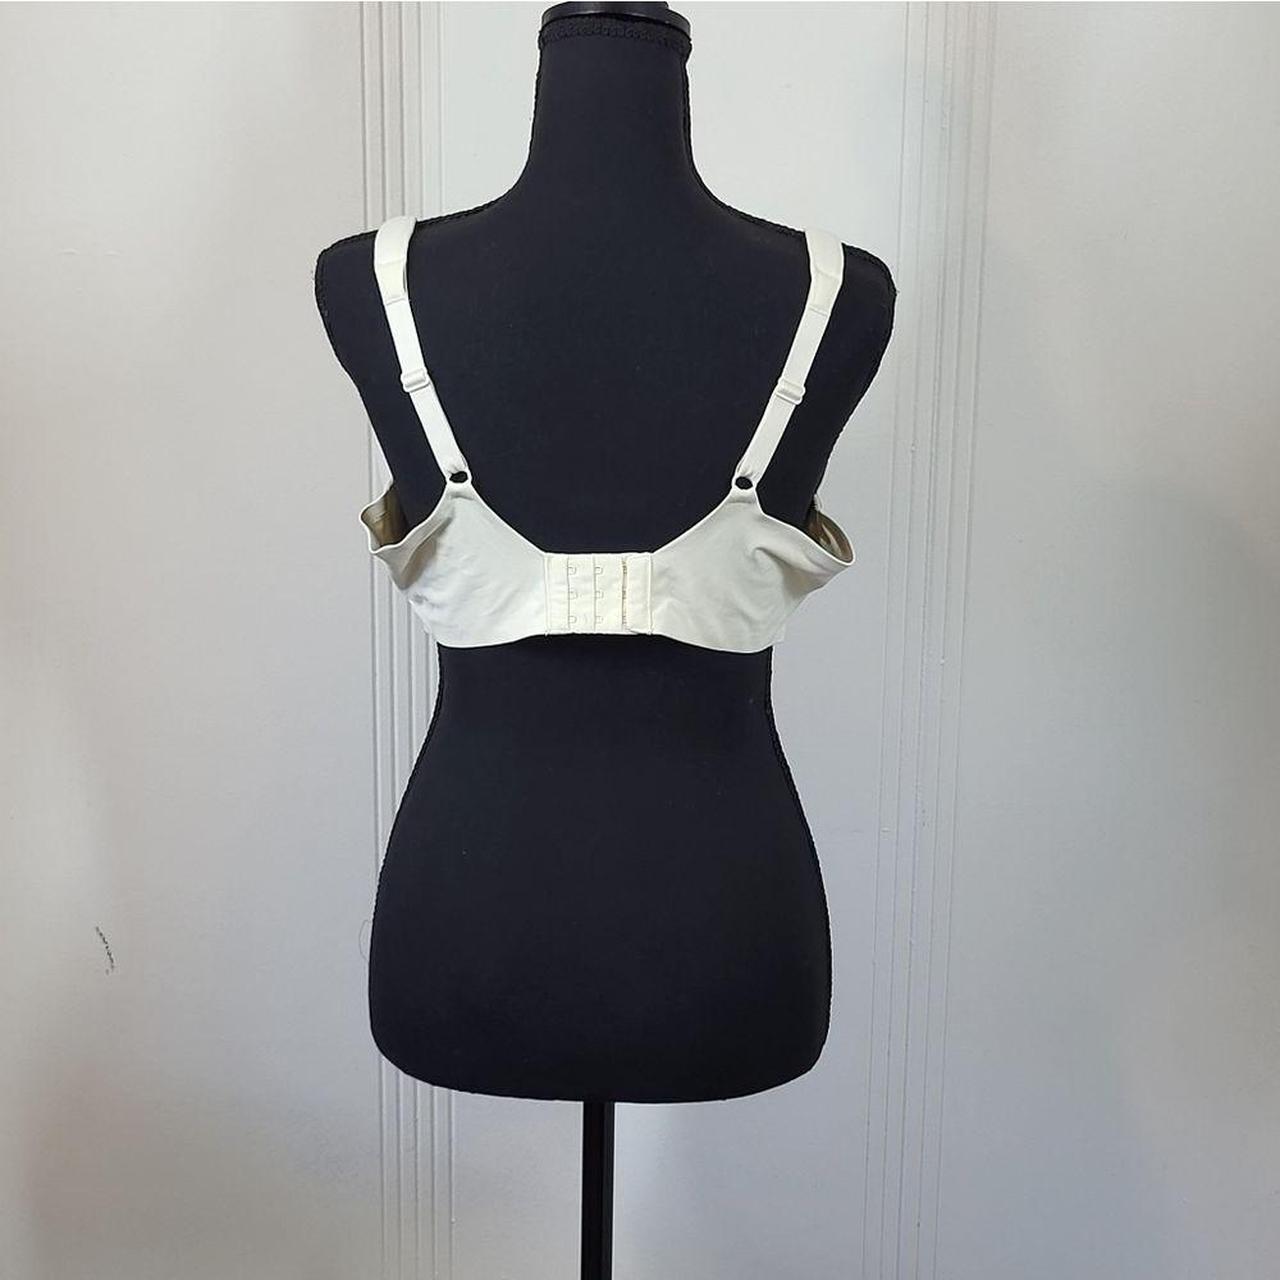 Product Image 3 - Olga bra. Size 40DD. EXCELLENT